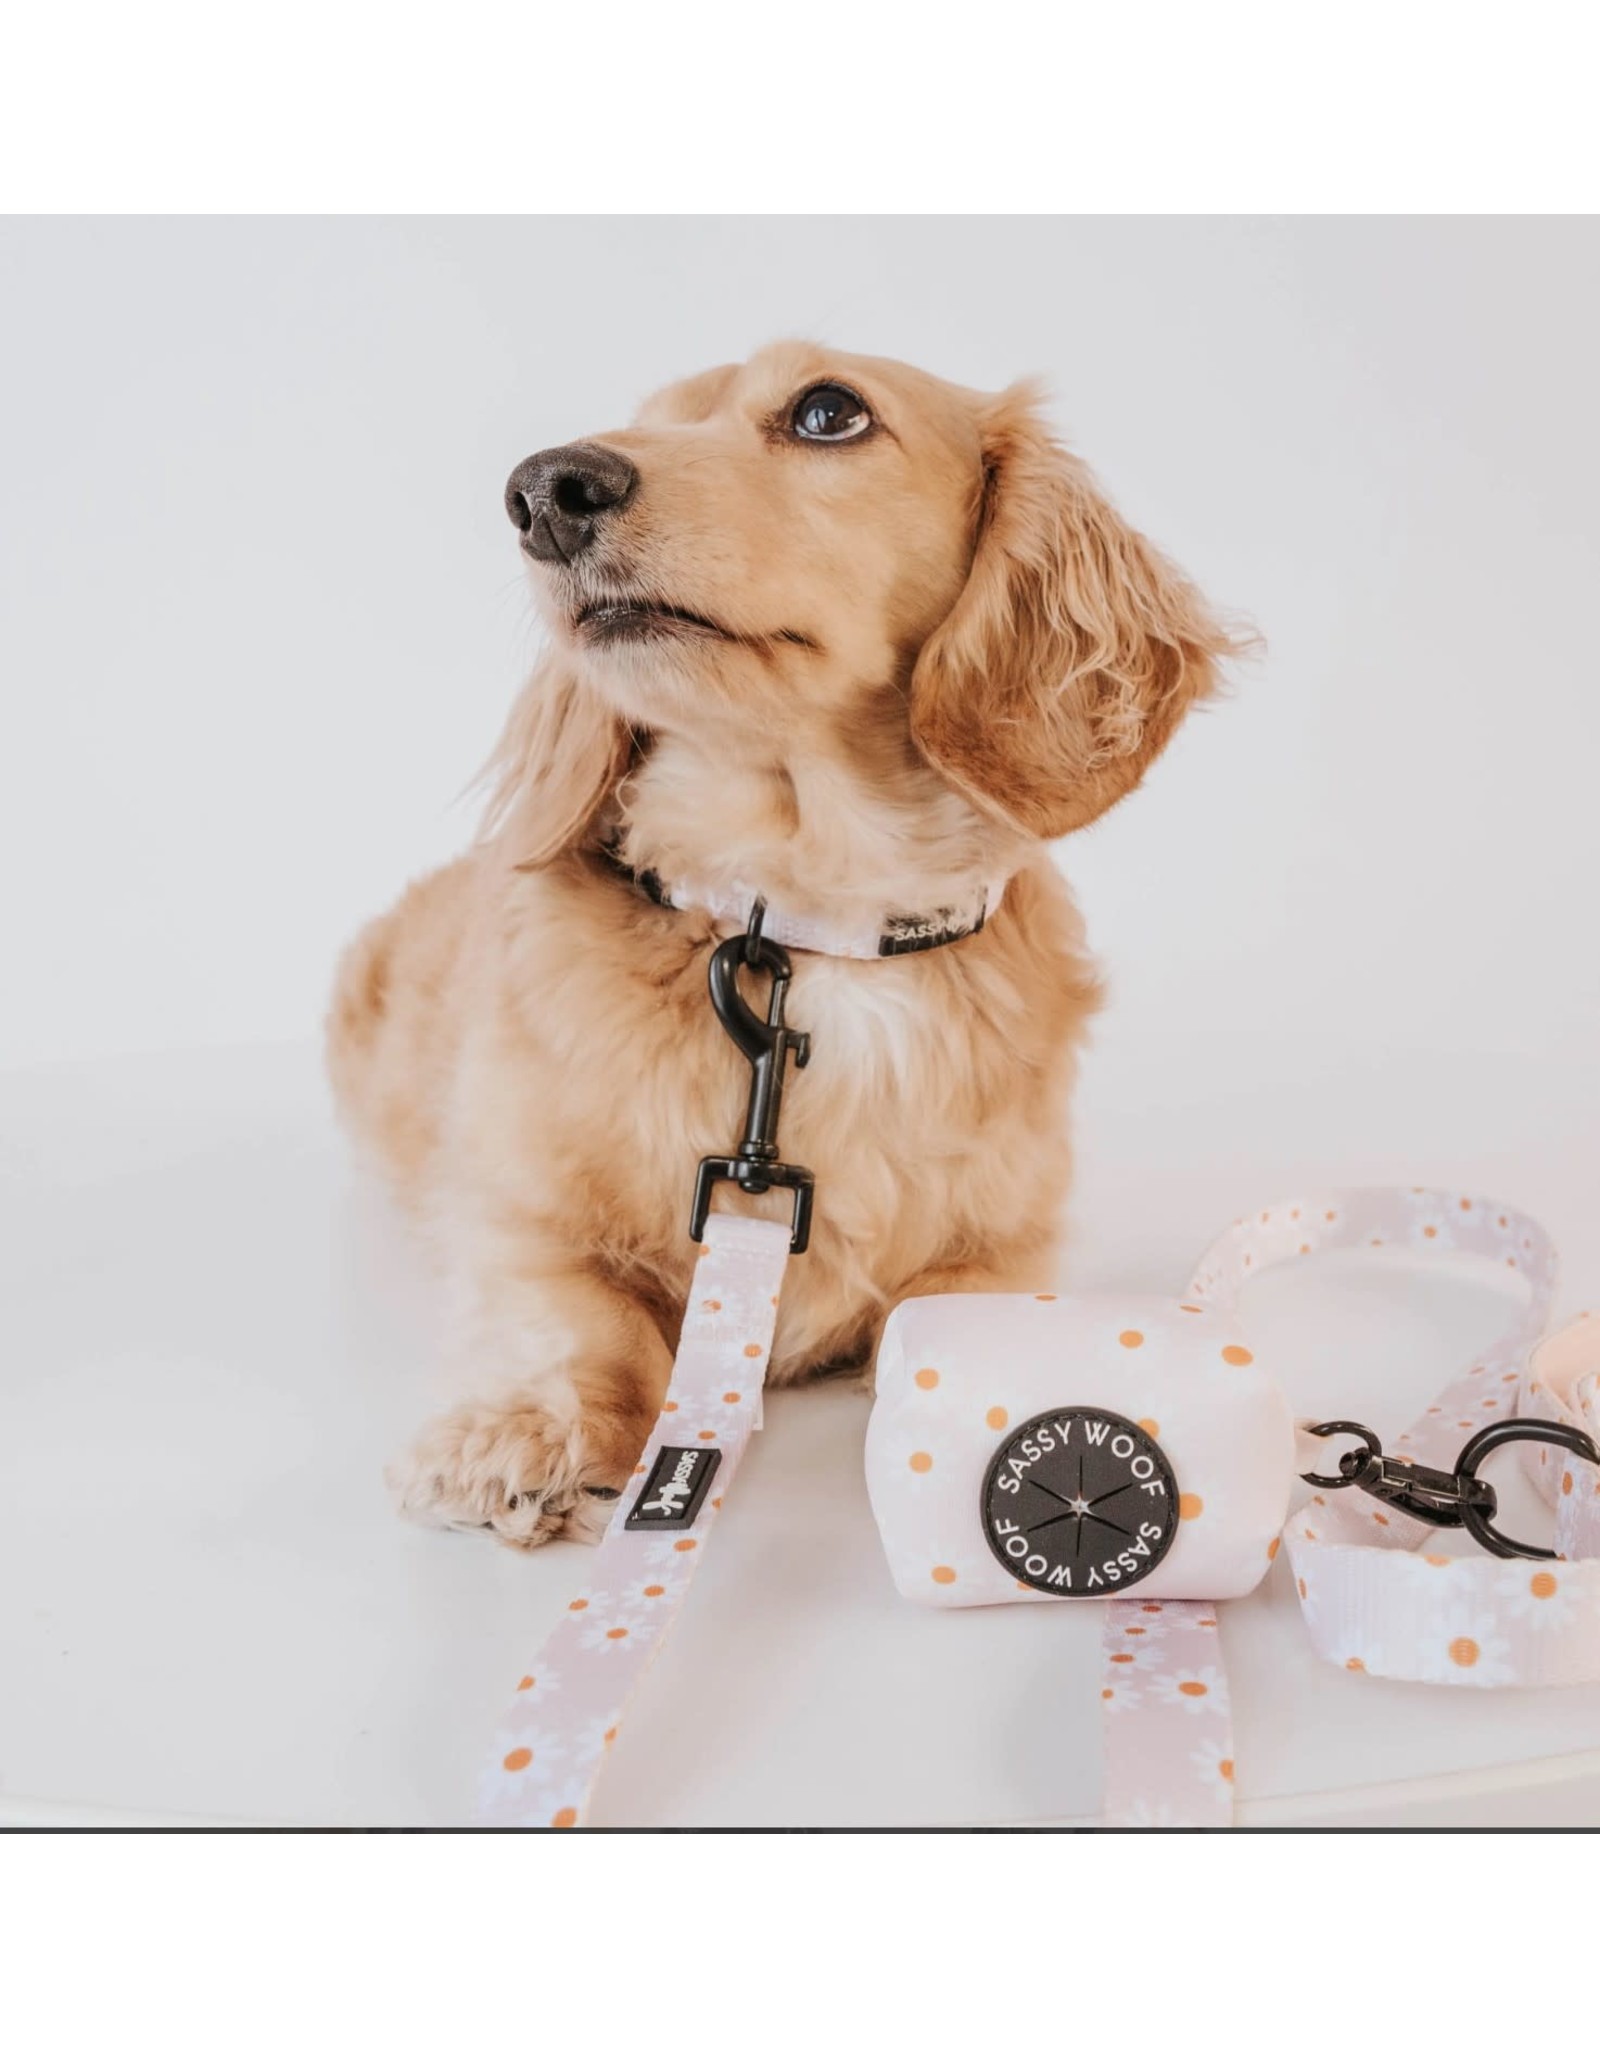 Sassy Woof 'Dainty Daisy' Dog Collar